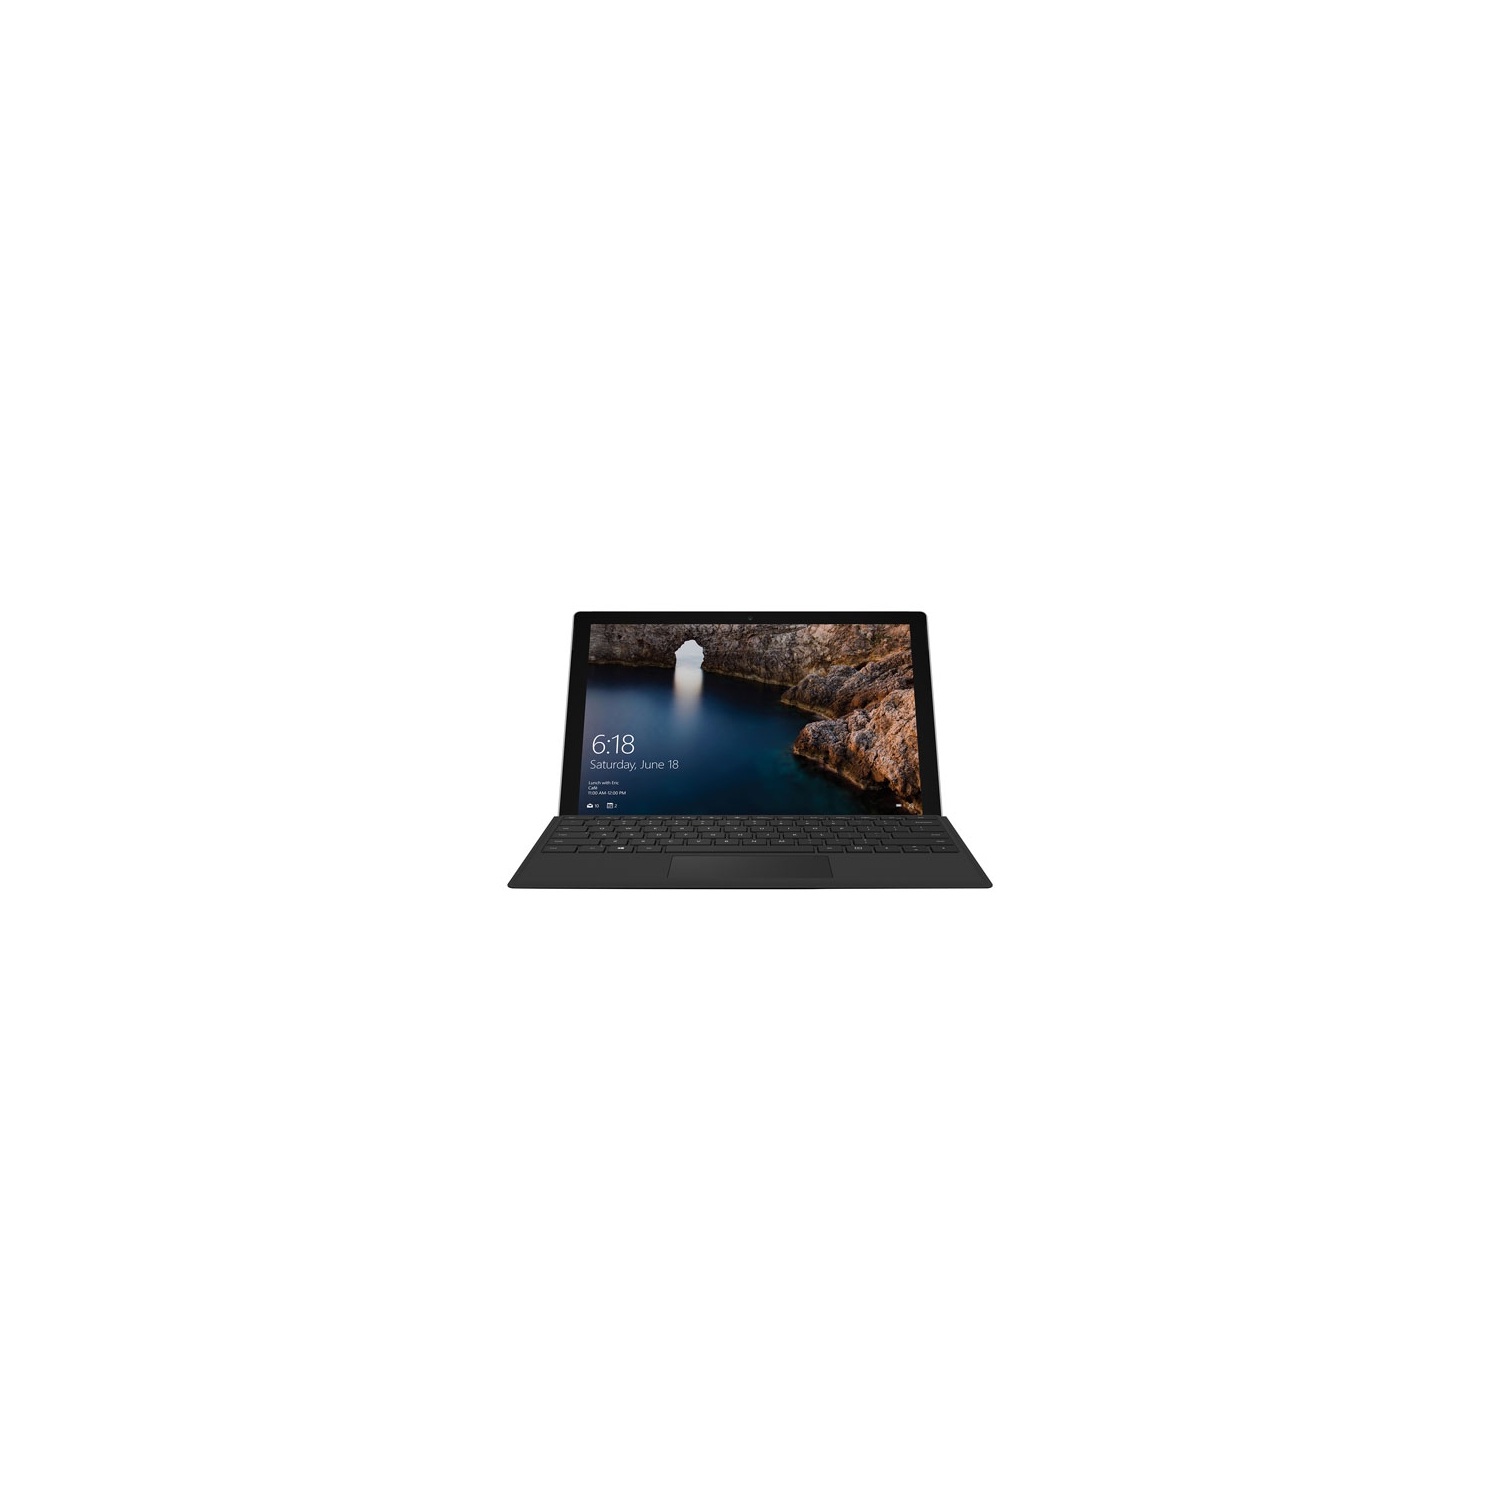 Refurbished (Good) - Microsoft Surface Pro 4 12.3" 128GB Windows 10 Tablet & Keyboard with Intel Core i5-6300U - Black